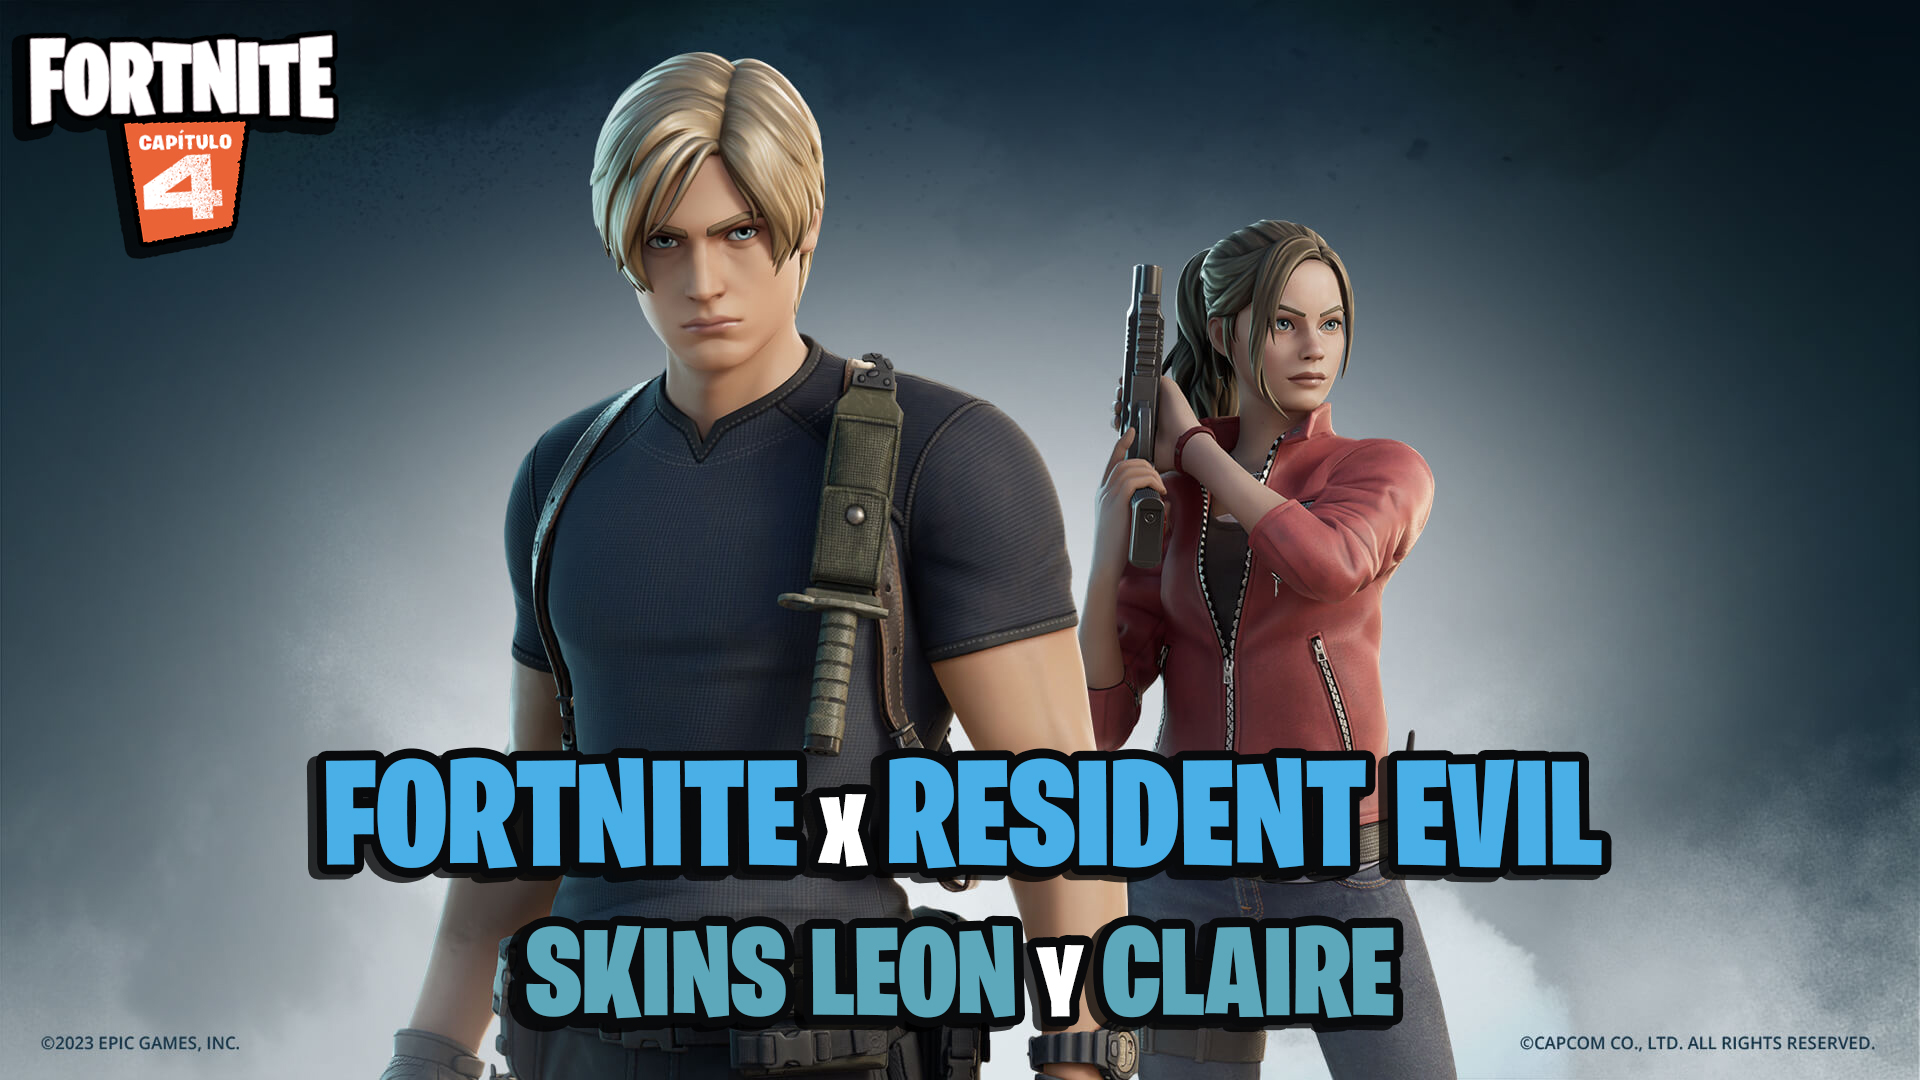 Leon y Claire de Resident Evil llegan a Fortnite: así son sus espectaculares skins